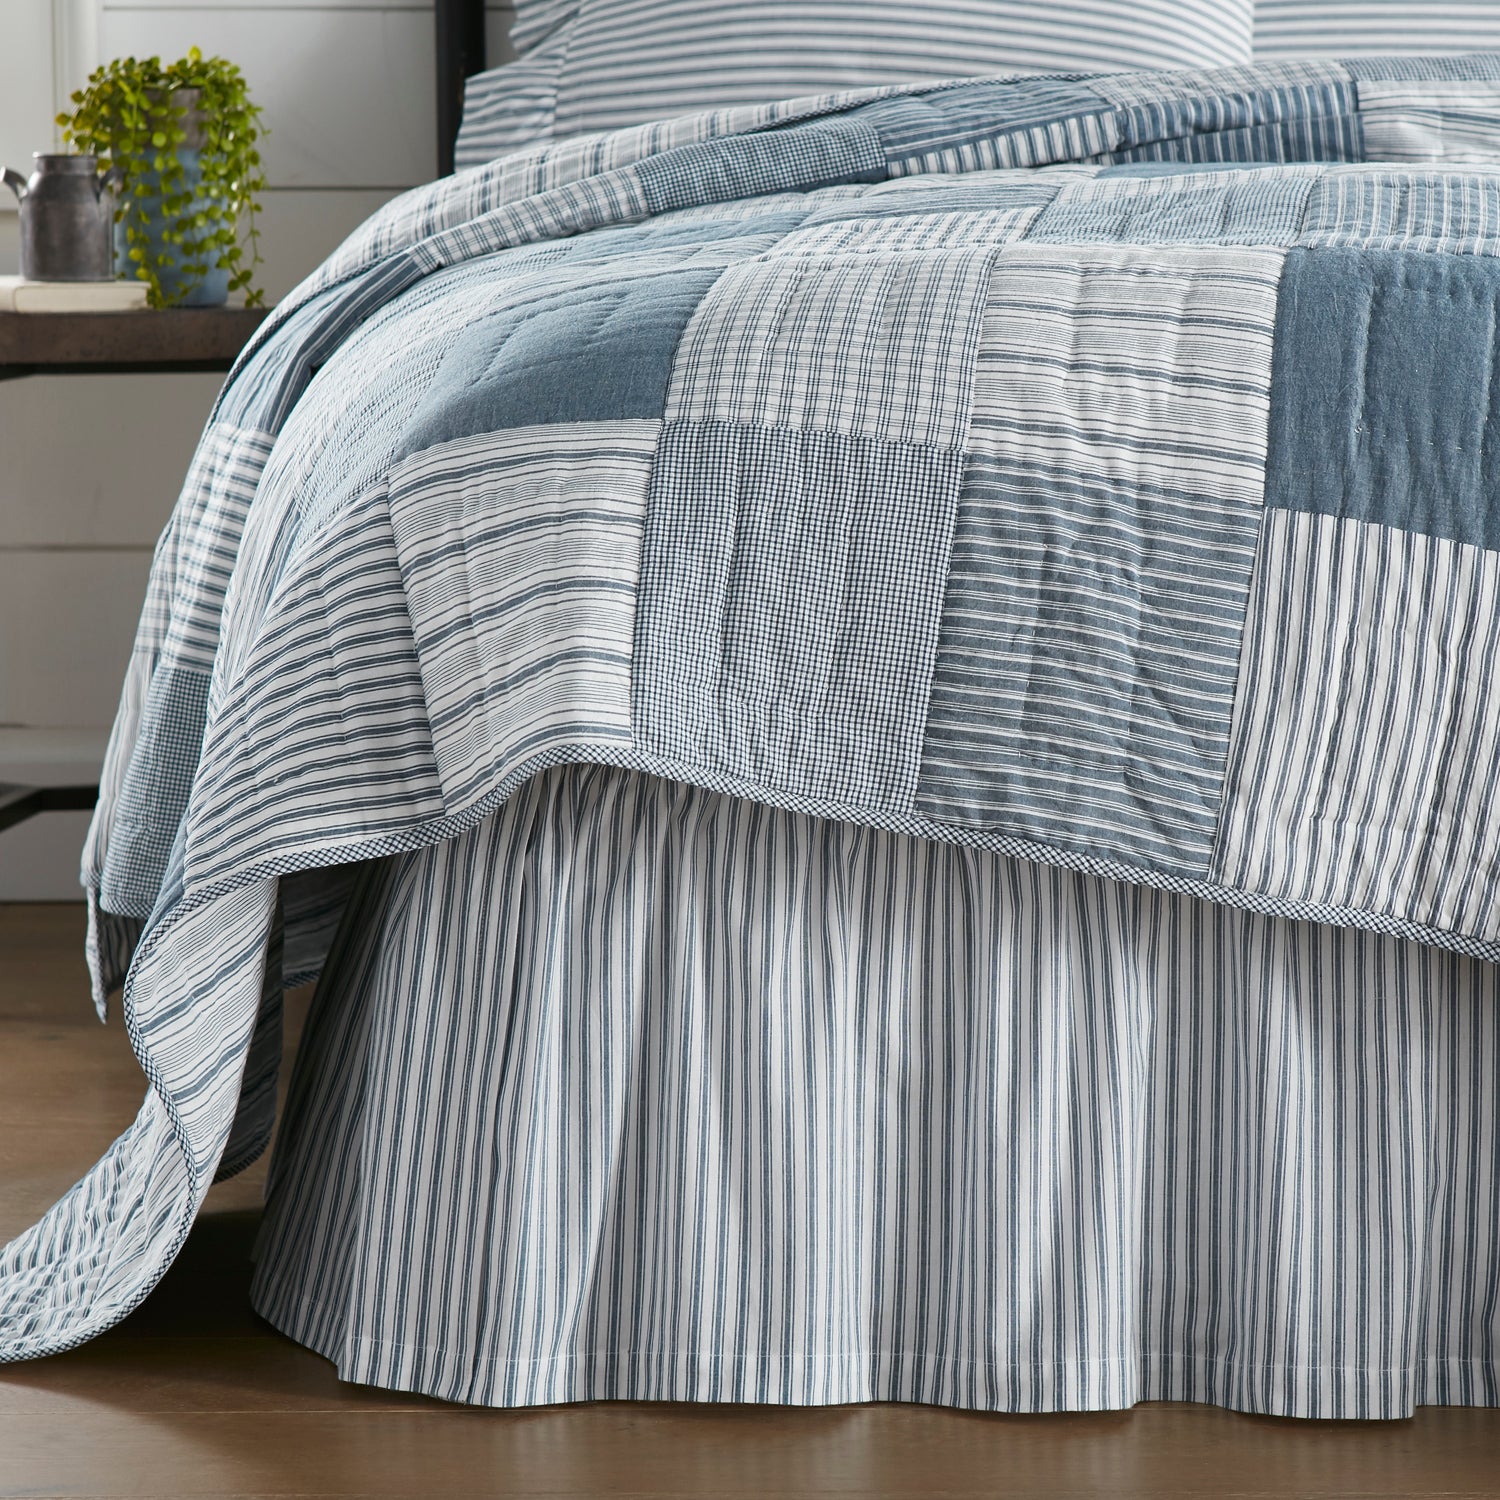 51906-Sawyer-Mill-Blue-Ticking-Stripe-Queen-Bed-Skirt-60x80x16-image-1